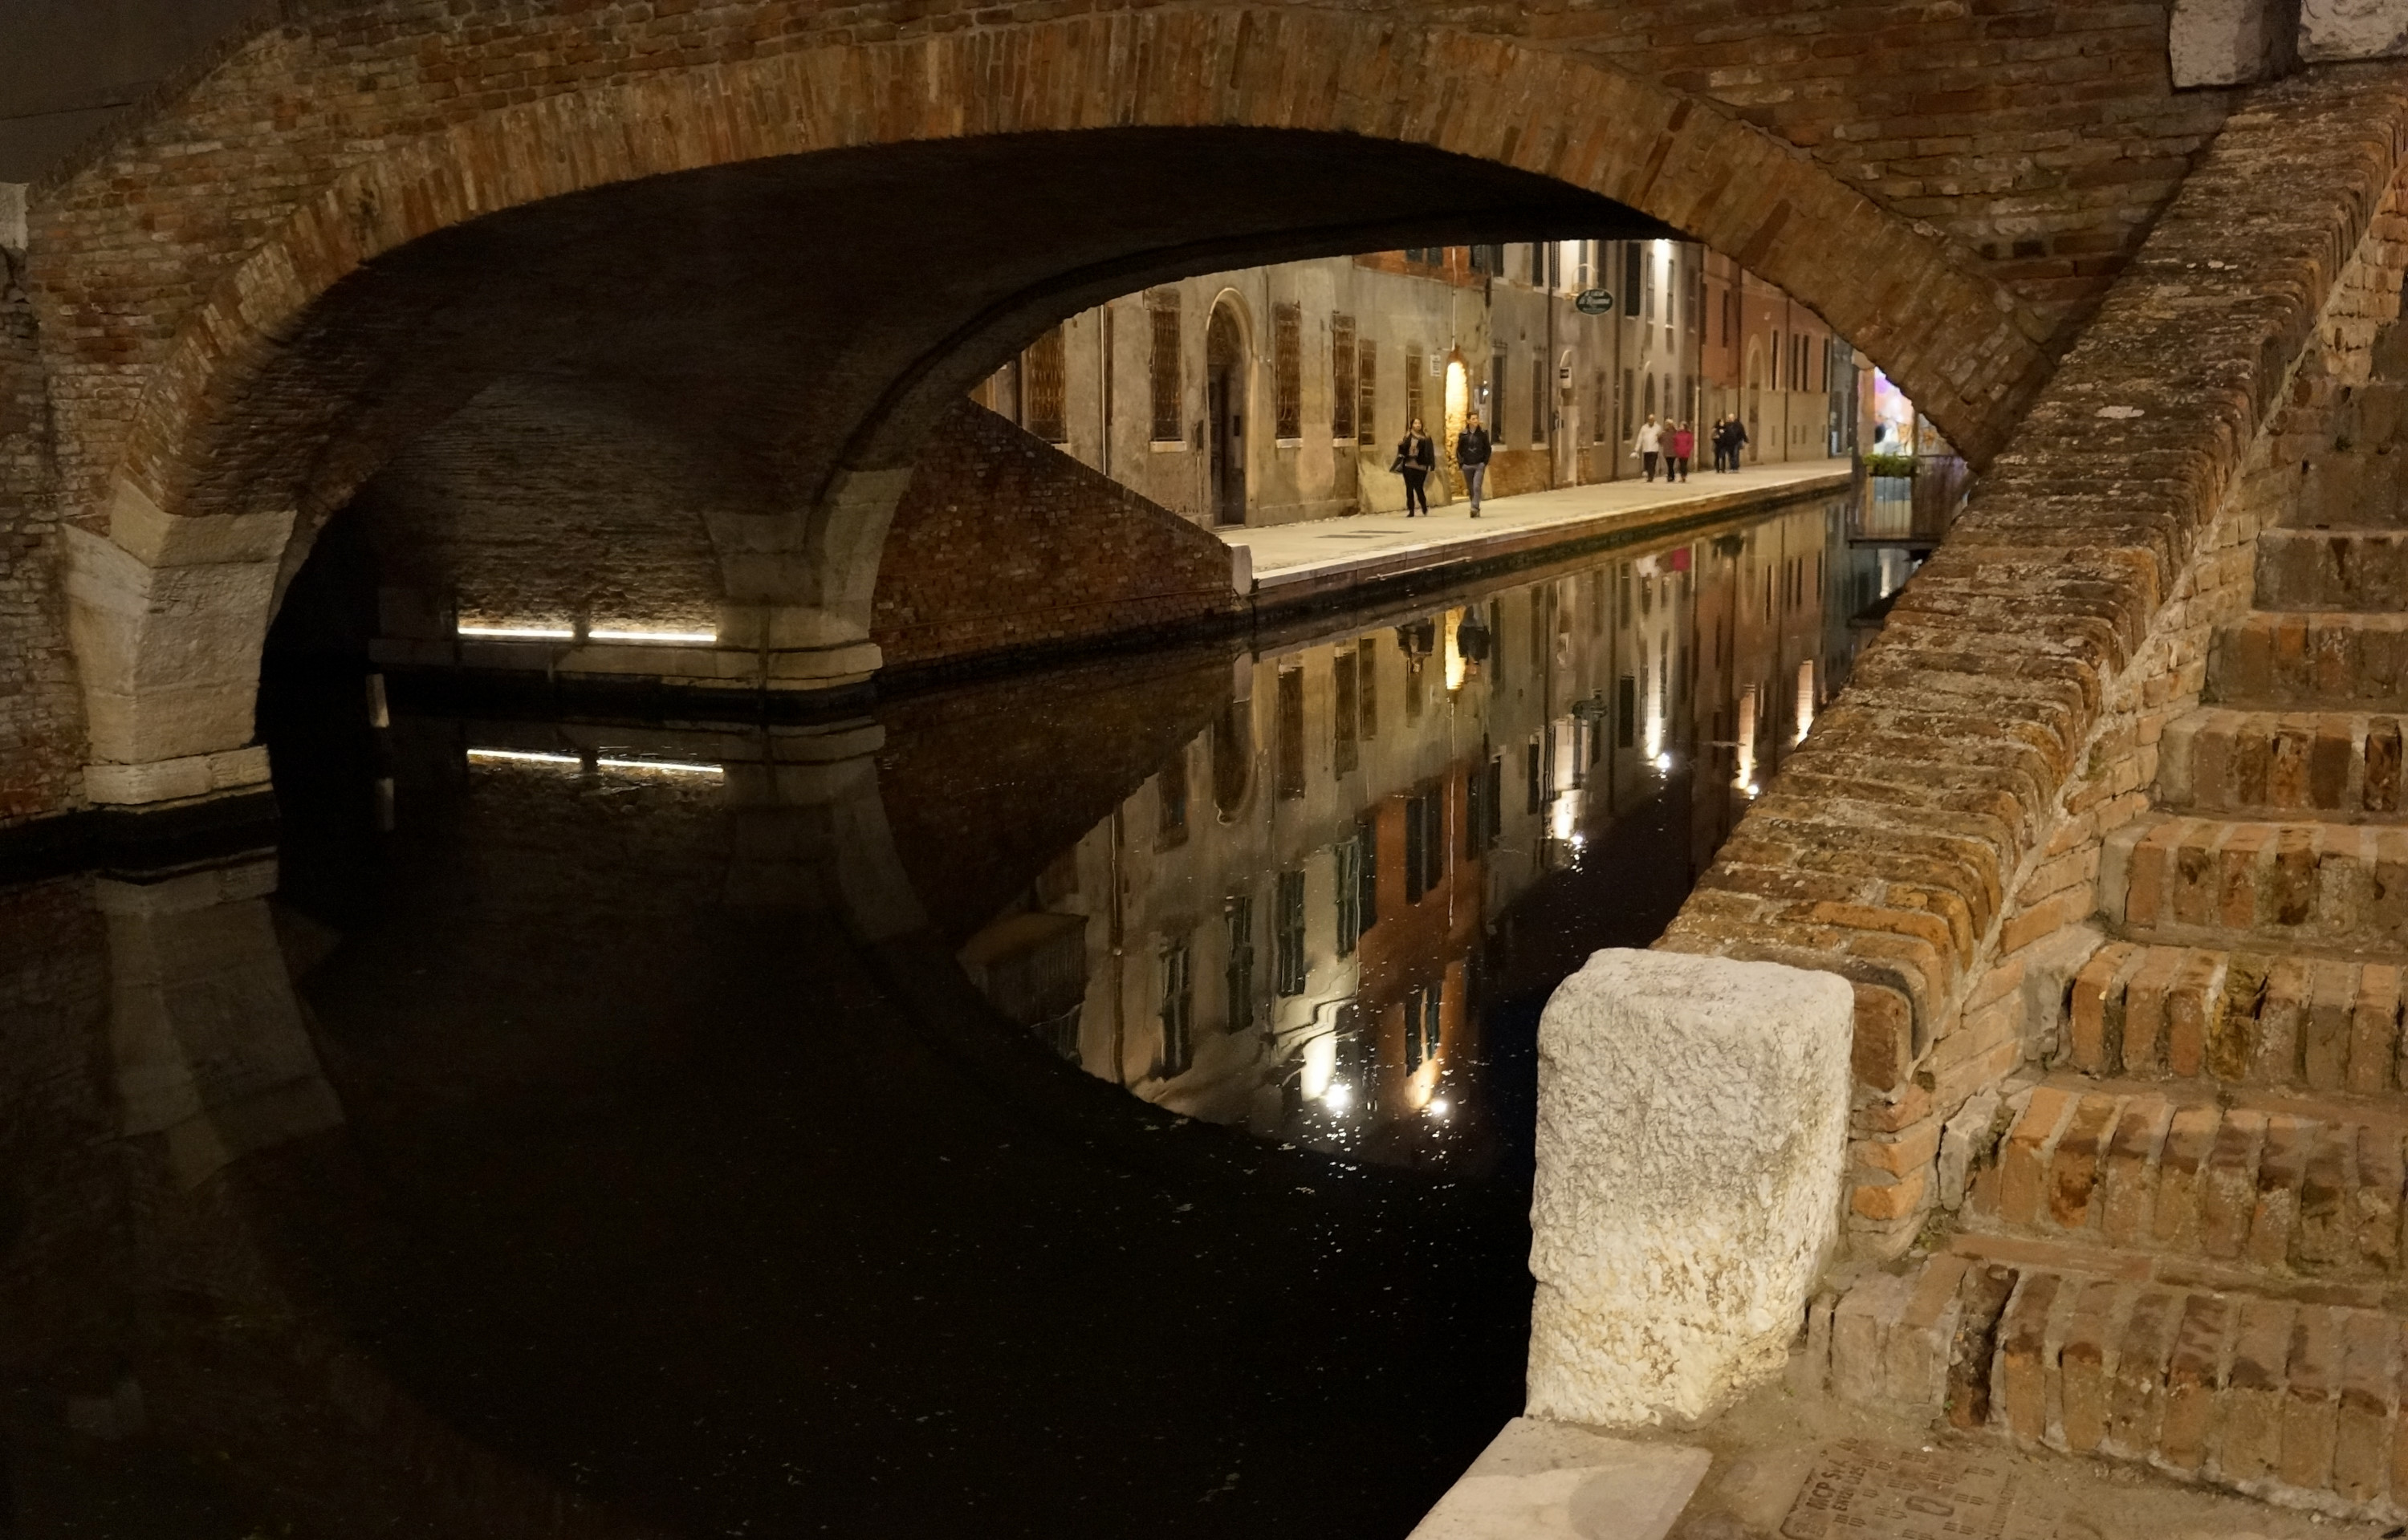 photo: https://upload.wikimedia.org/wikipedia/commons/9/9f/Riflessi_notturni_sotto_il_ponte_degli_sbirri_-_Comacchio.JPG